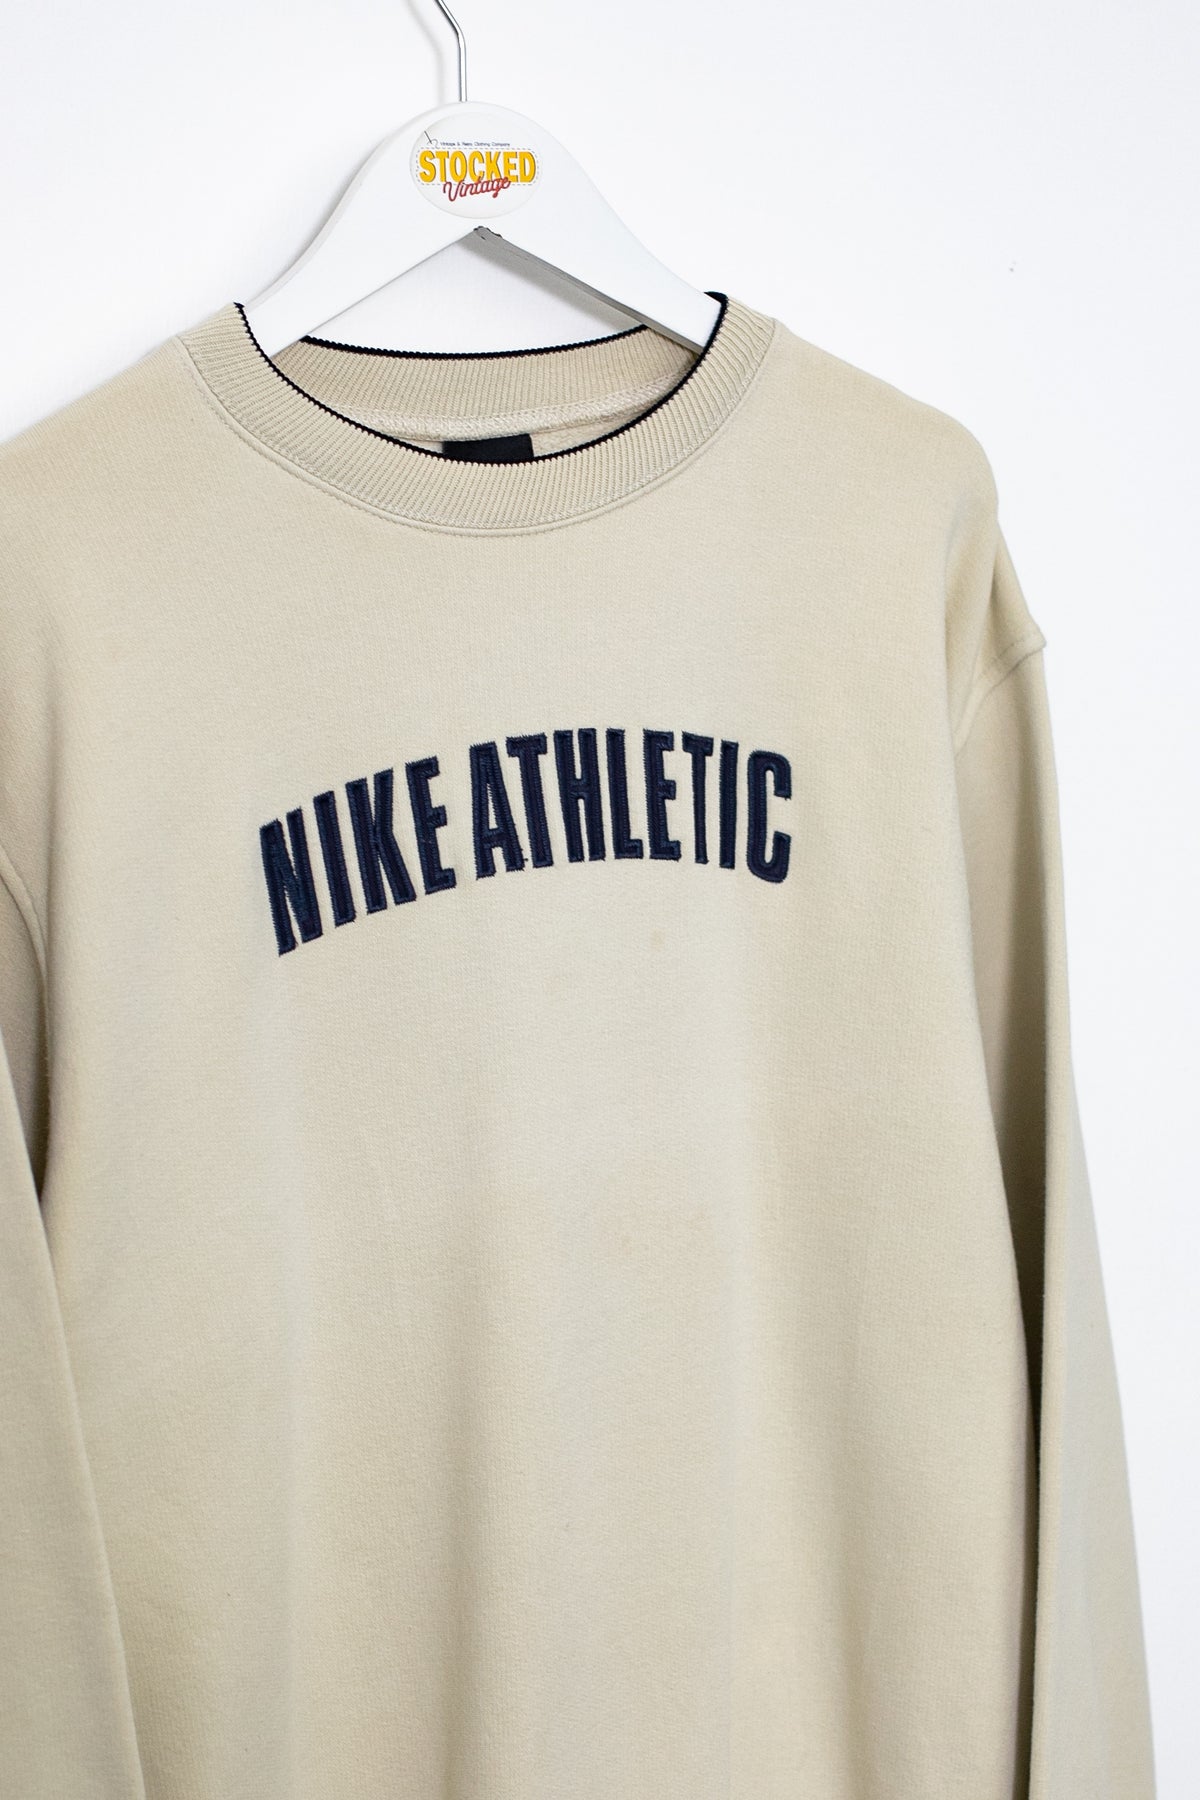 Womens 00s Nike Sweatshirt (L)